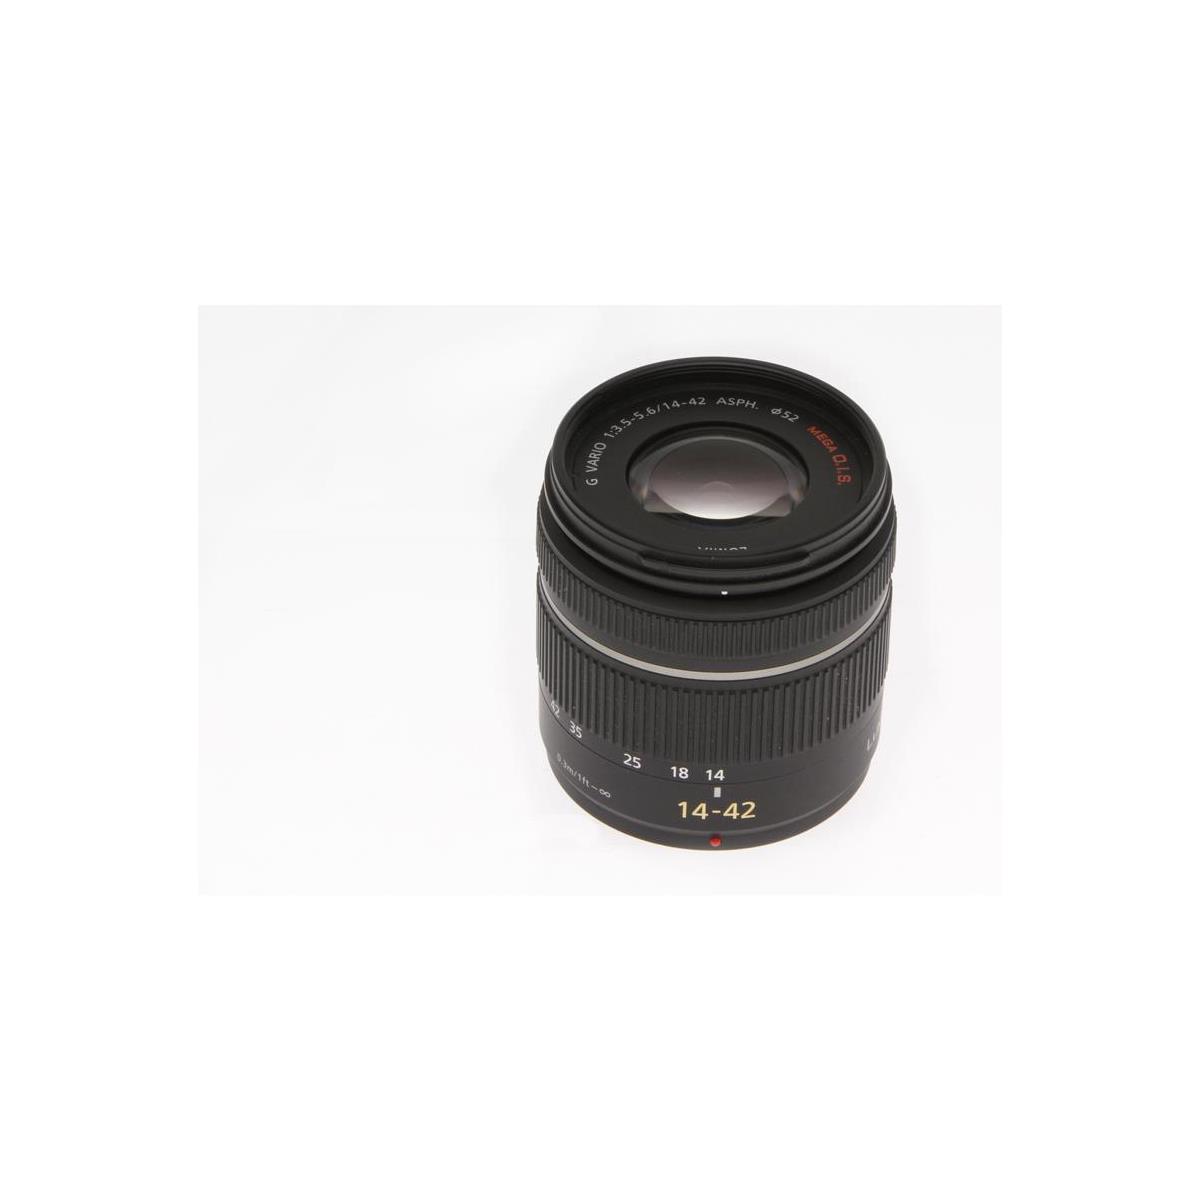 

Panasonic Lumix G Vario 14-42mm F/3.5-5.6 Mega O.I.S. Aspherical Lens, Black